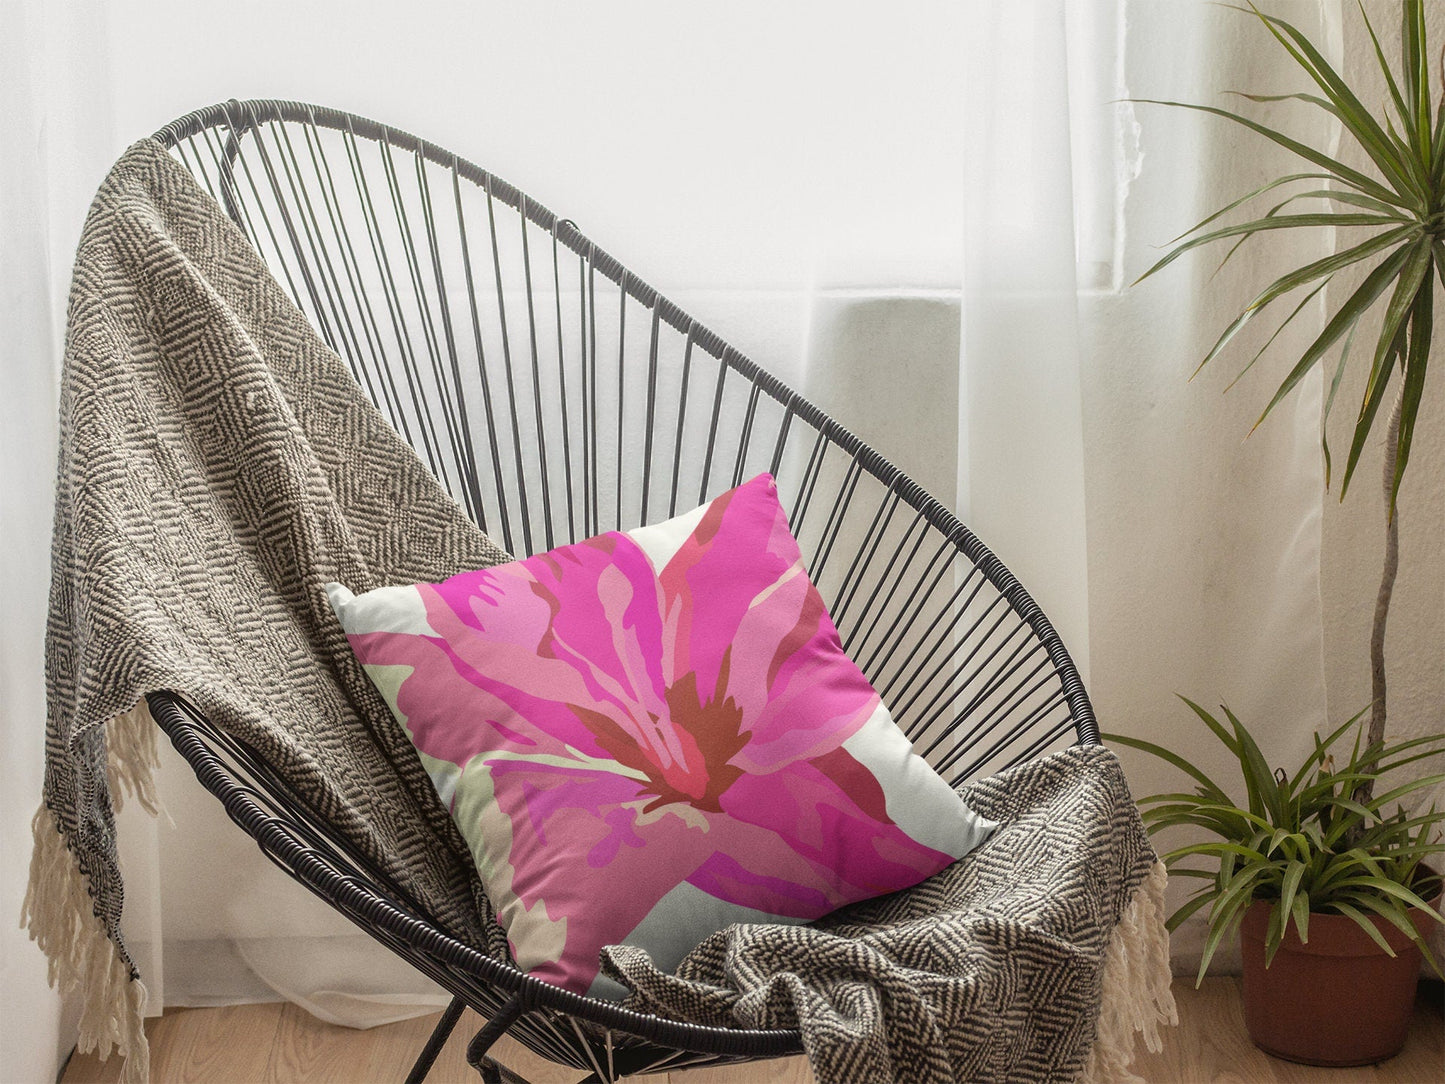 pink flower pillow in wicker chair